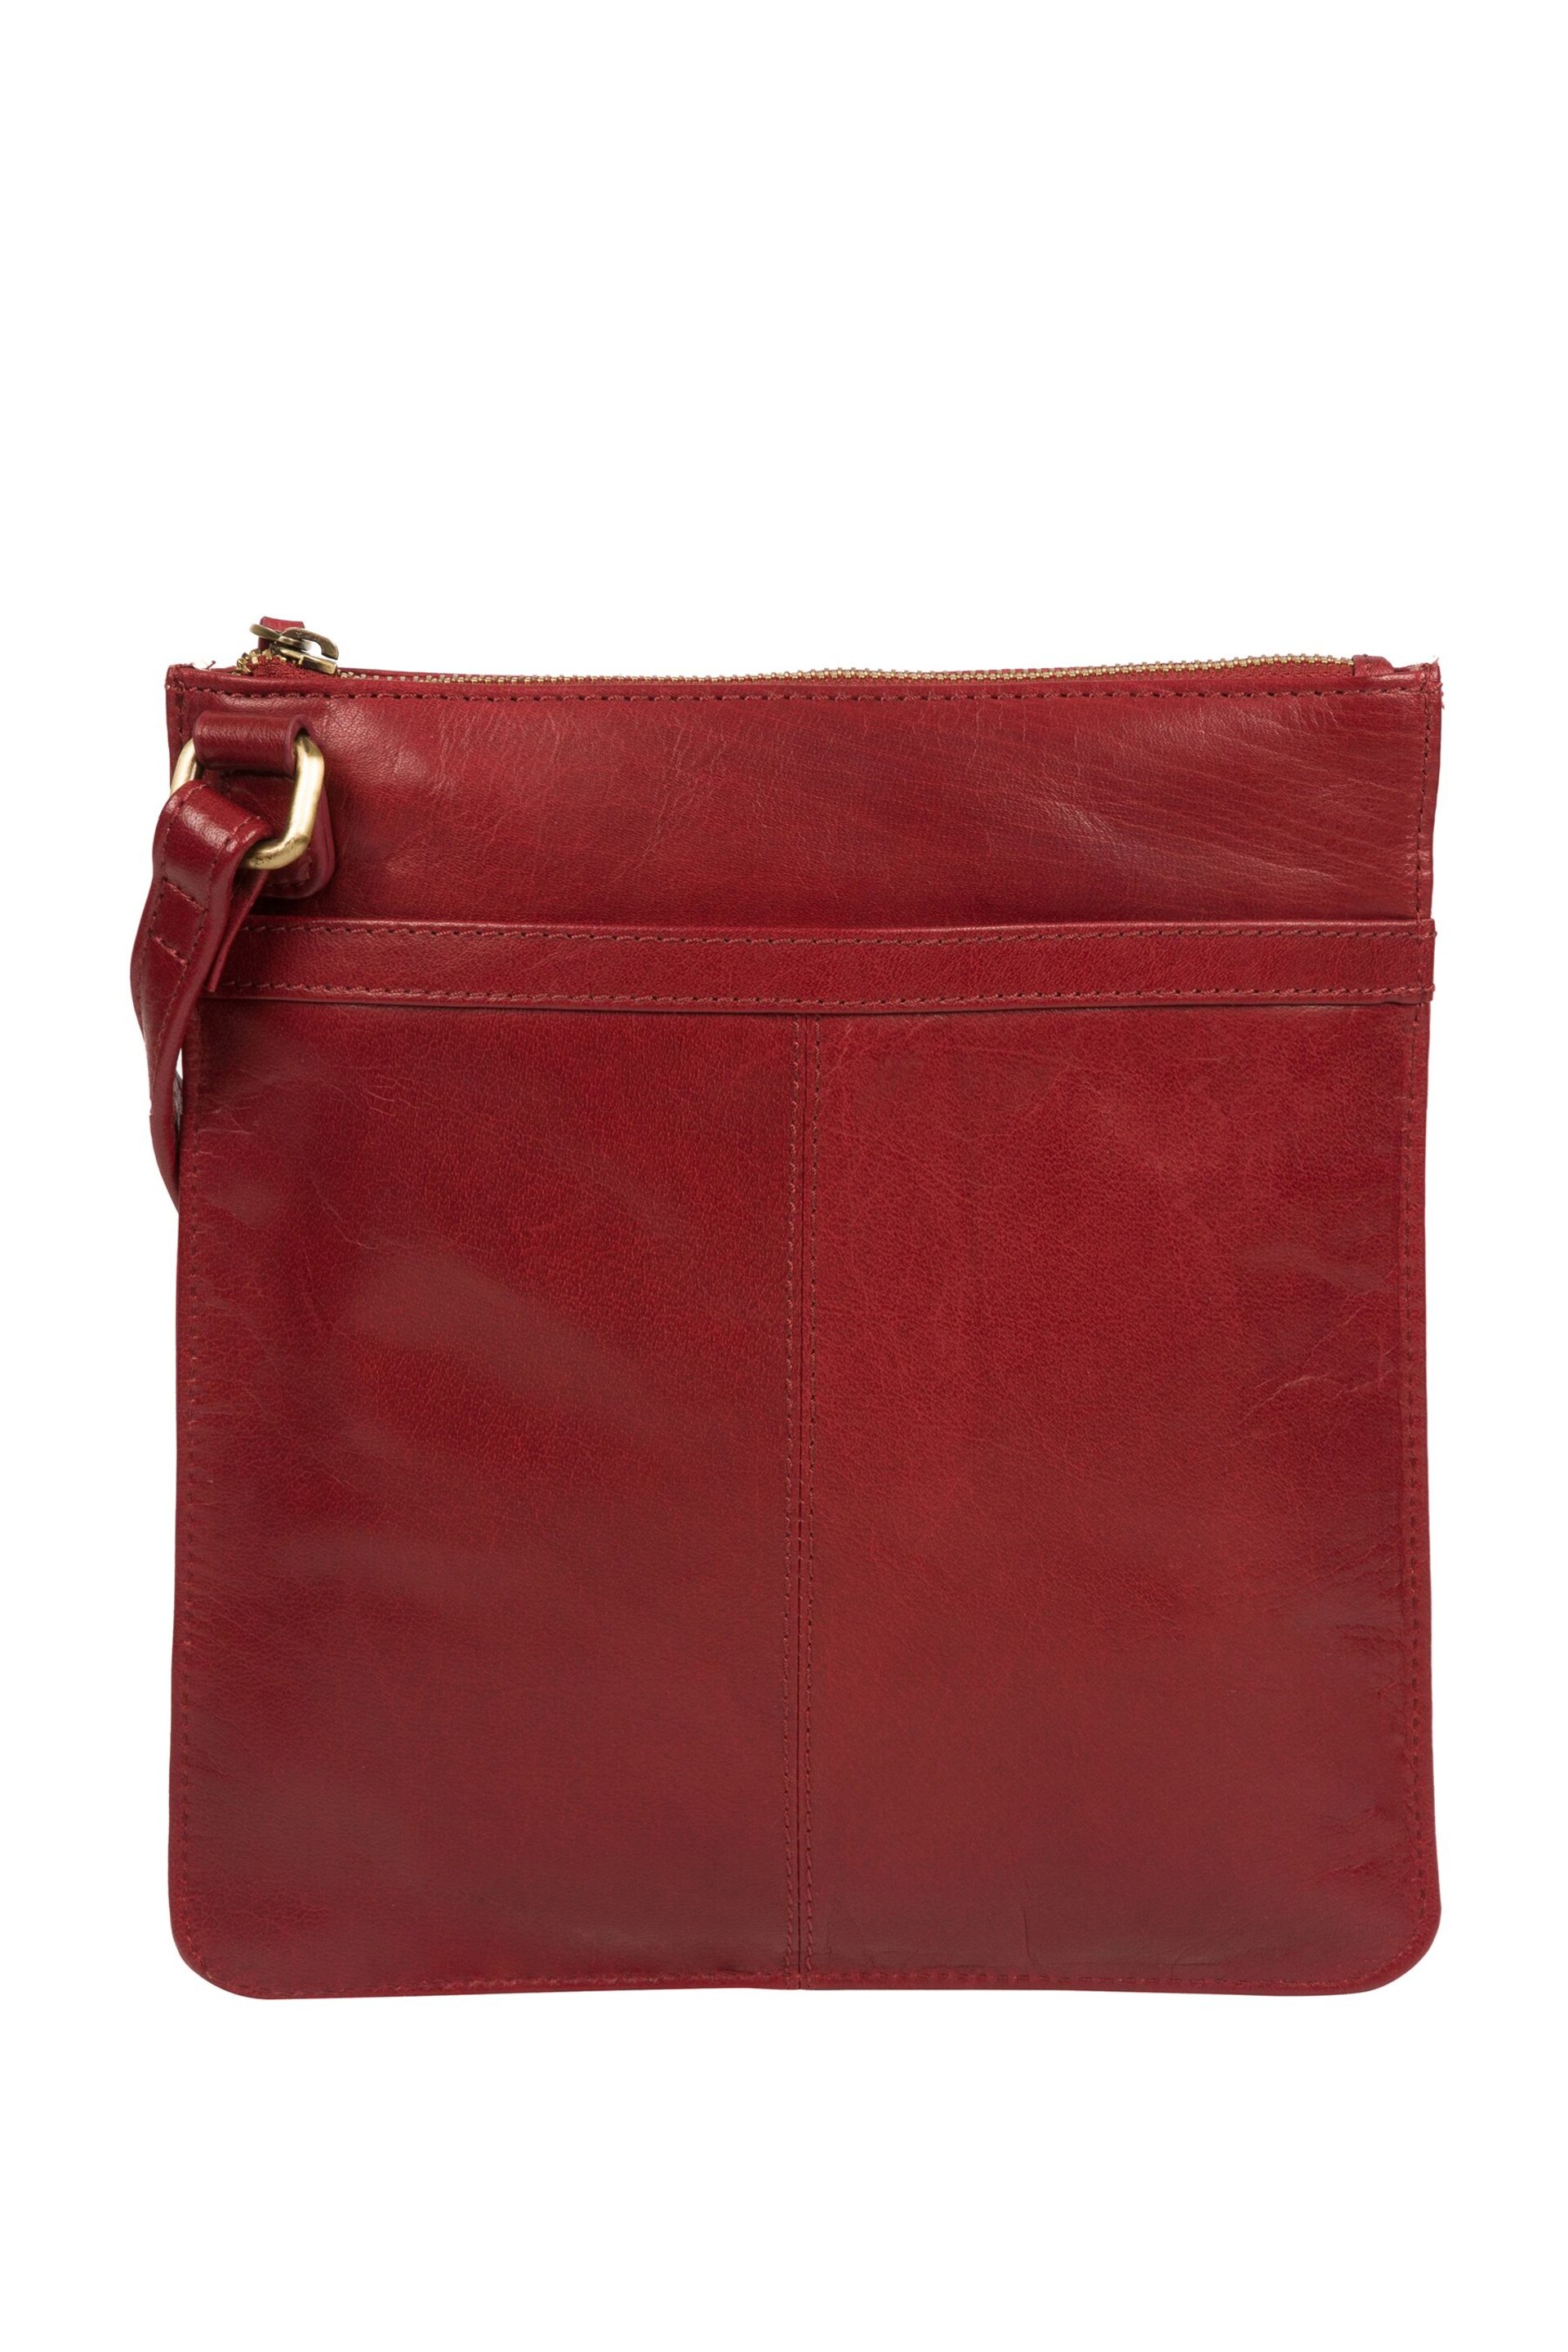 Conkca Lauryn Leather Cross-Body Bag - Image 2 of 5